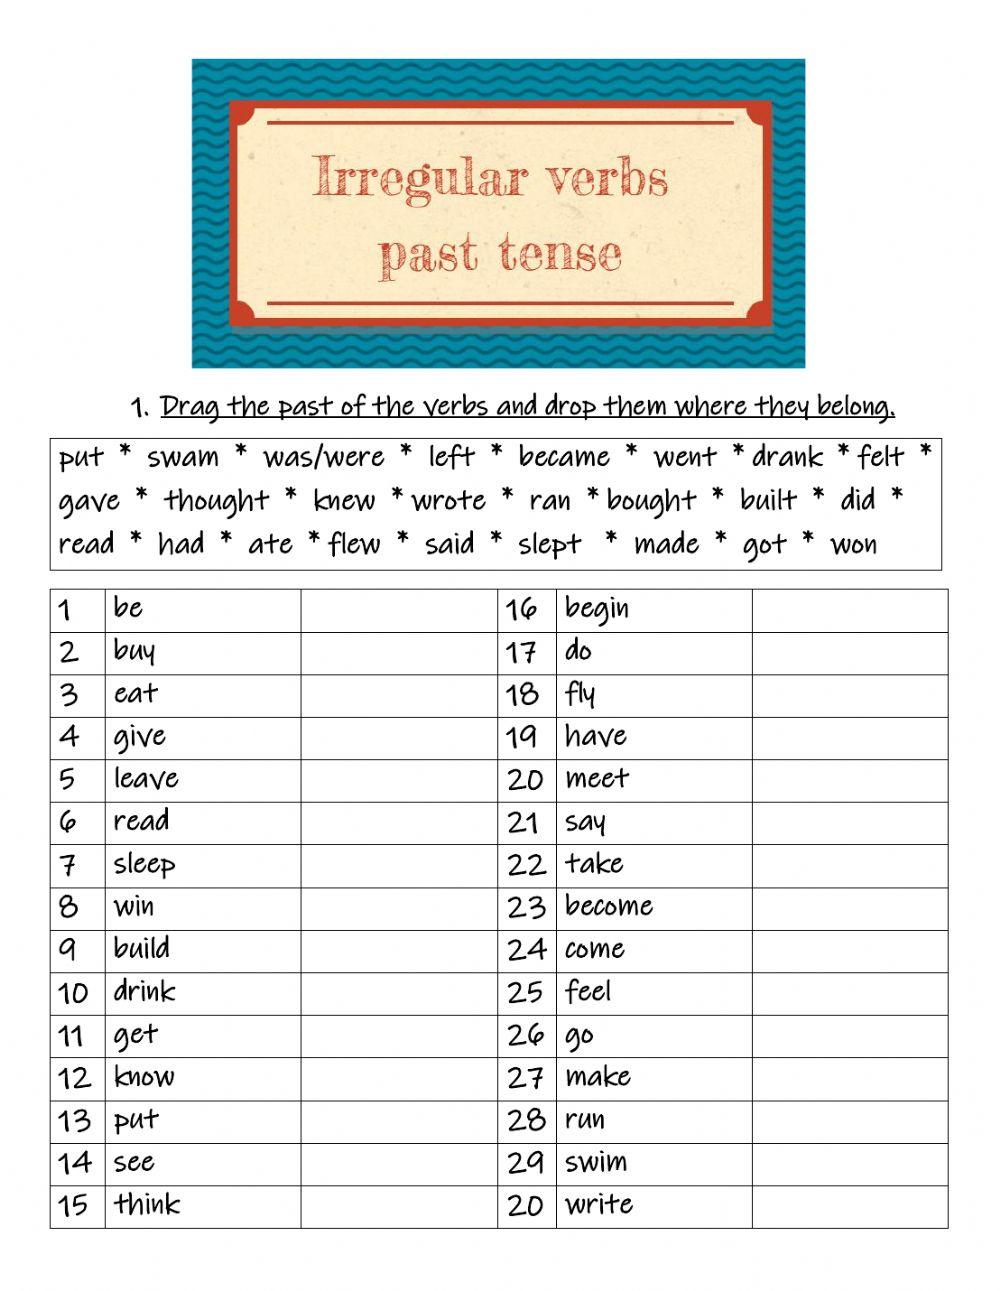 Irregular verbs (past tense)